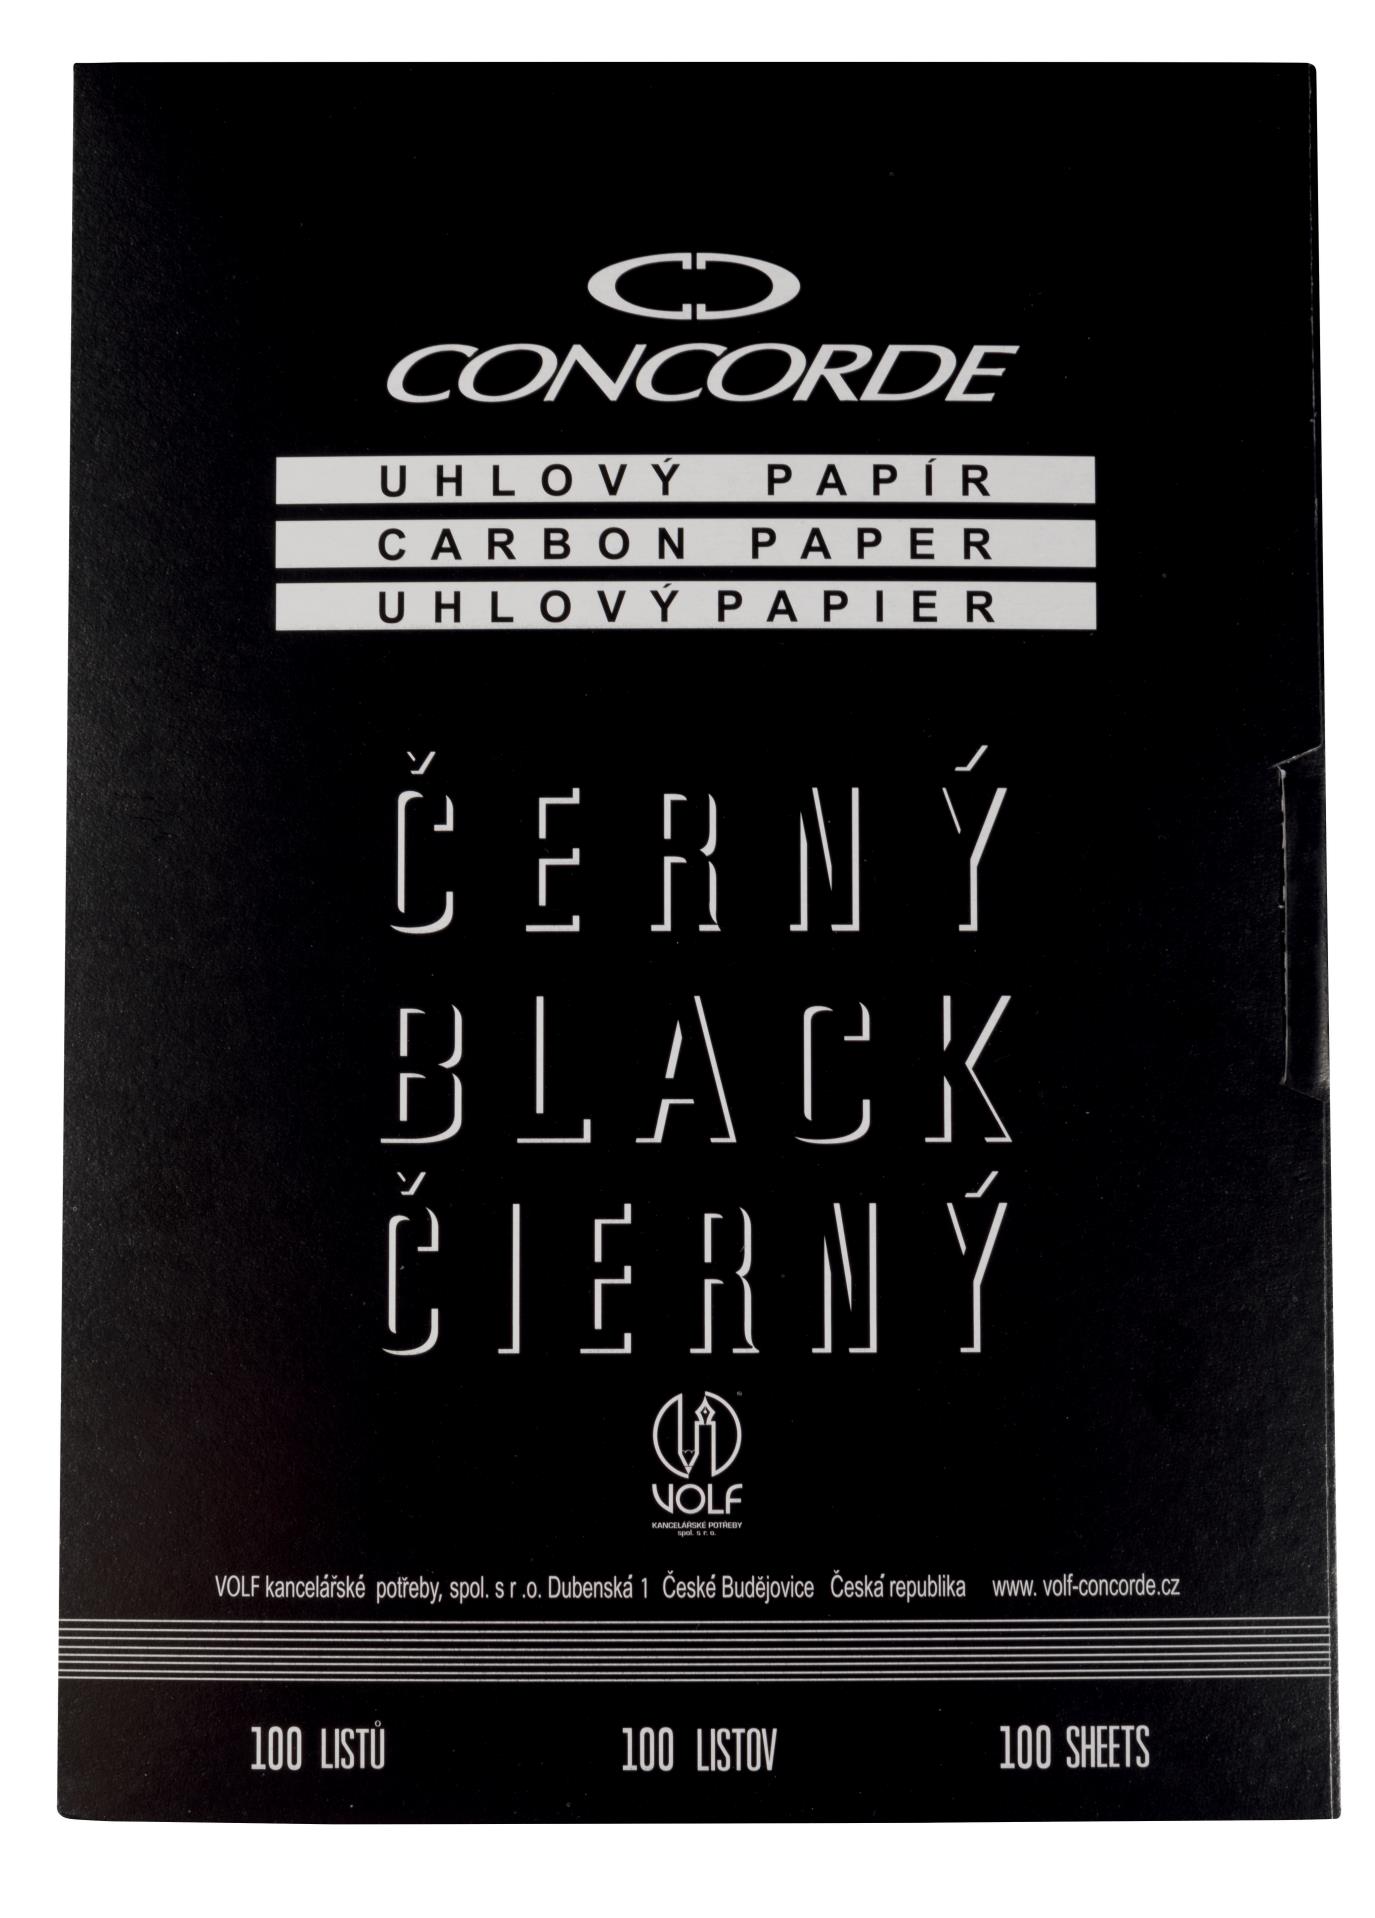 Uhlový papír Concorde - černý, 100 listů